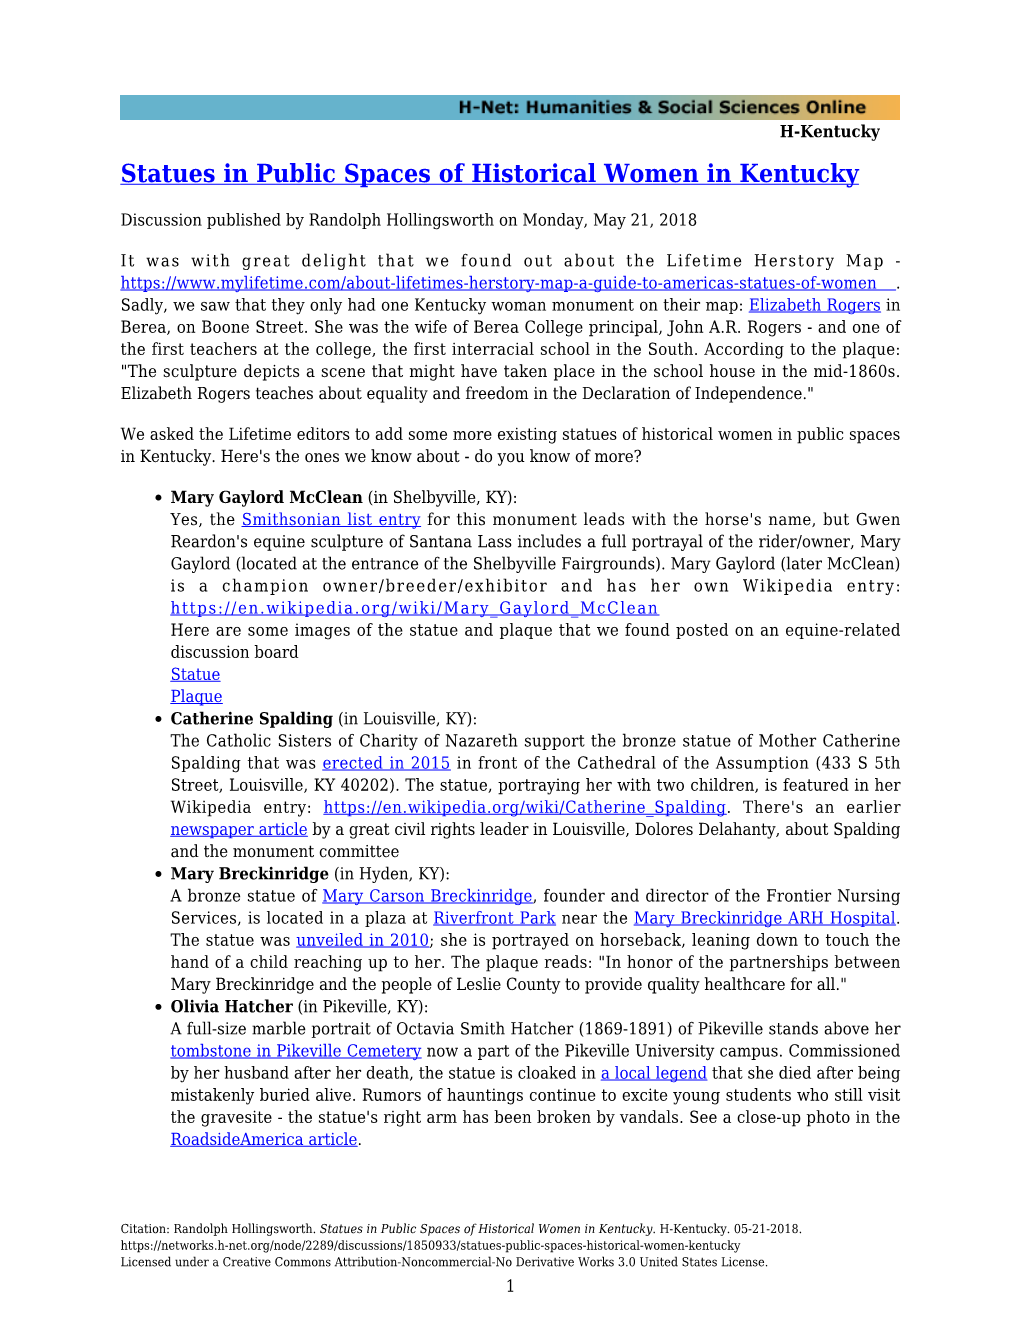 Statues in Public Spaces of Historical Women in Kentucky